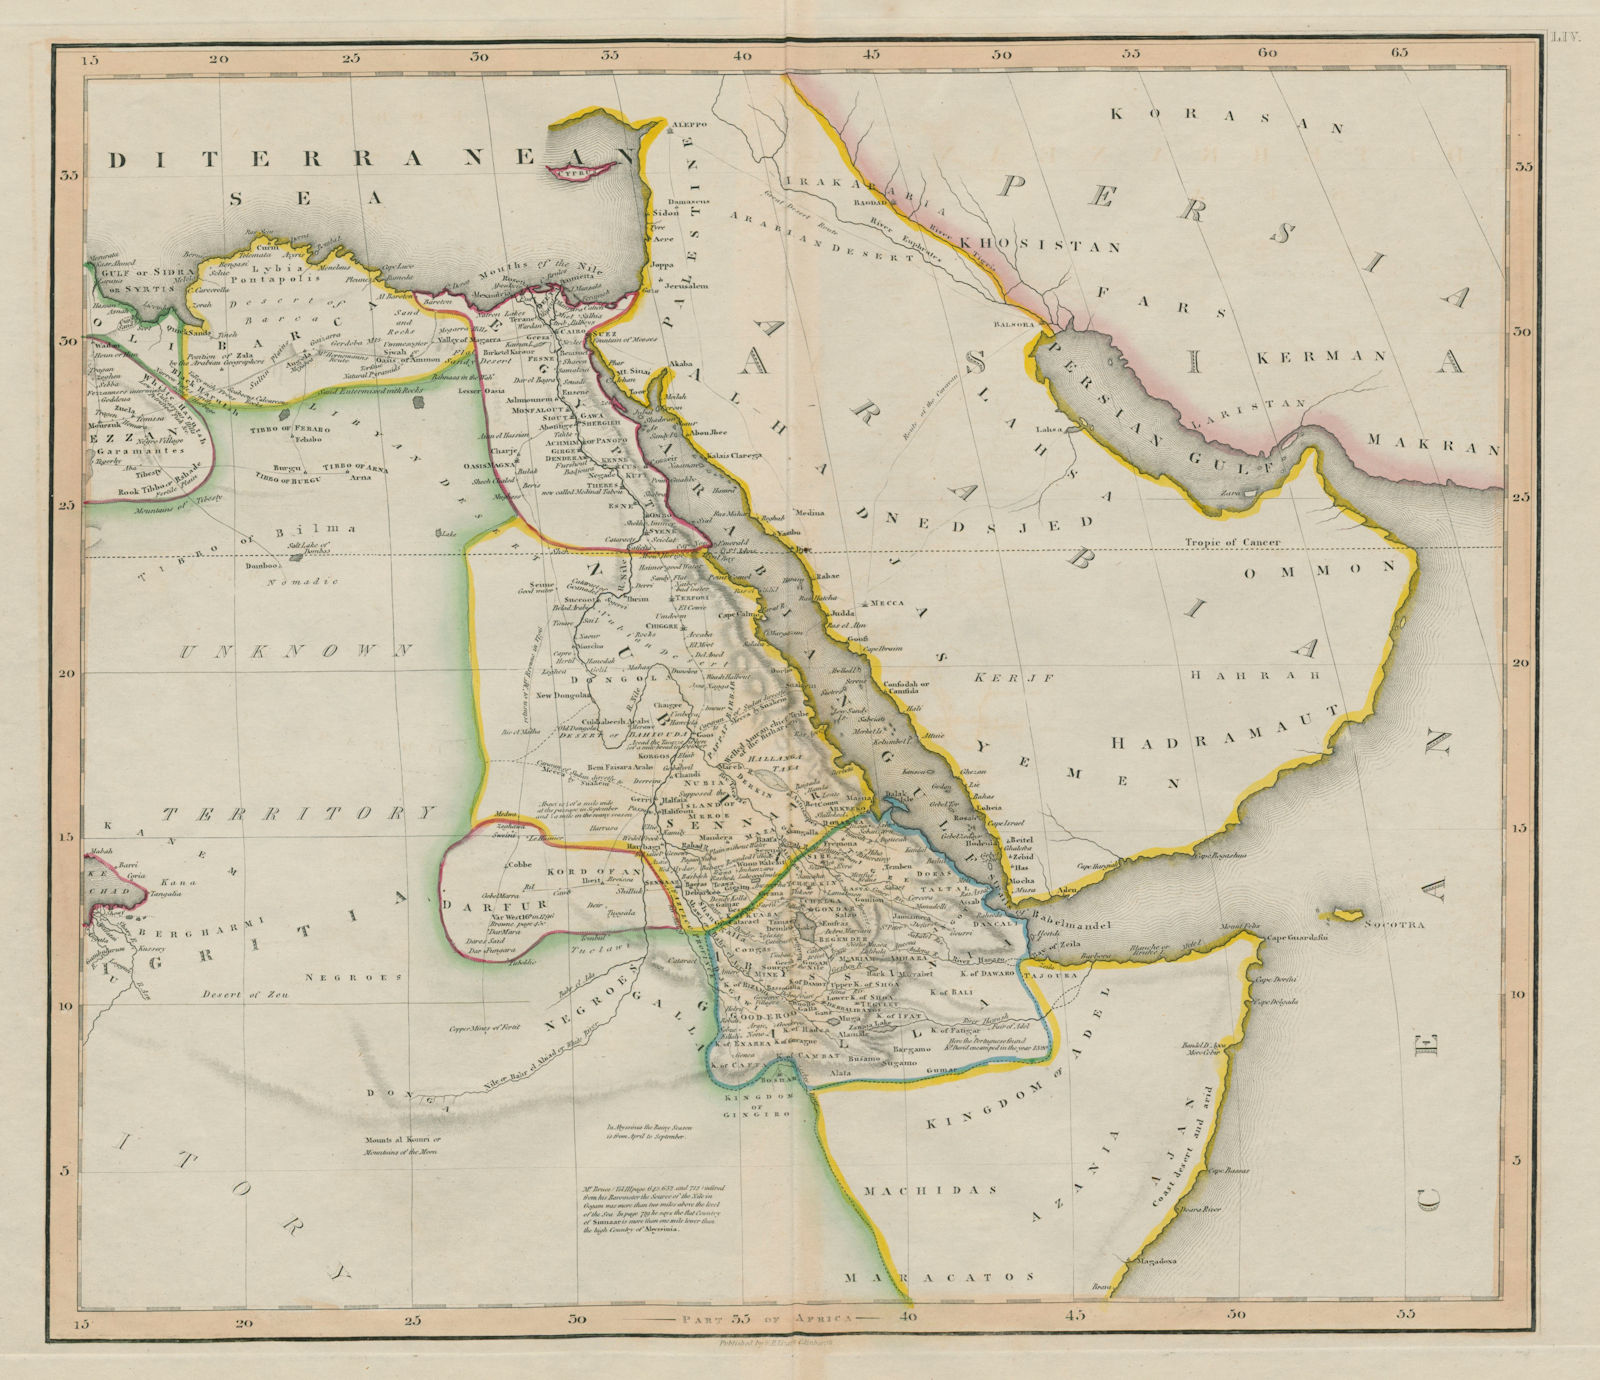 North-east Africa. Egypt Nile valley Abyssinia "Arabian Gulf". LIZARS 1842 map